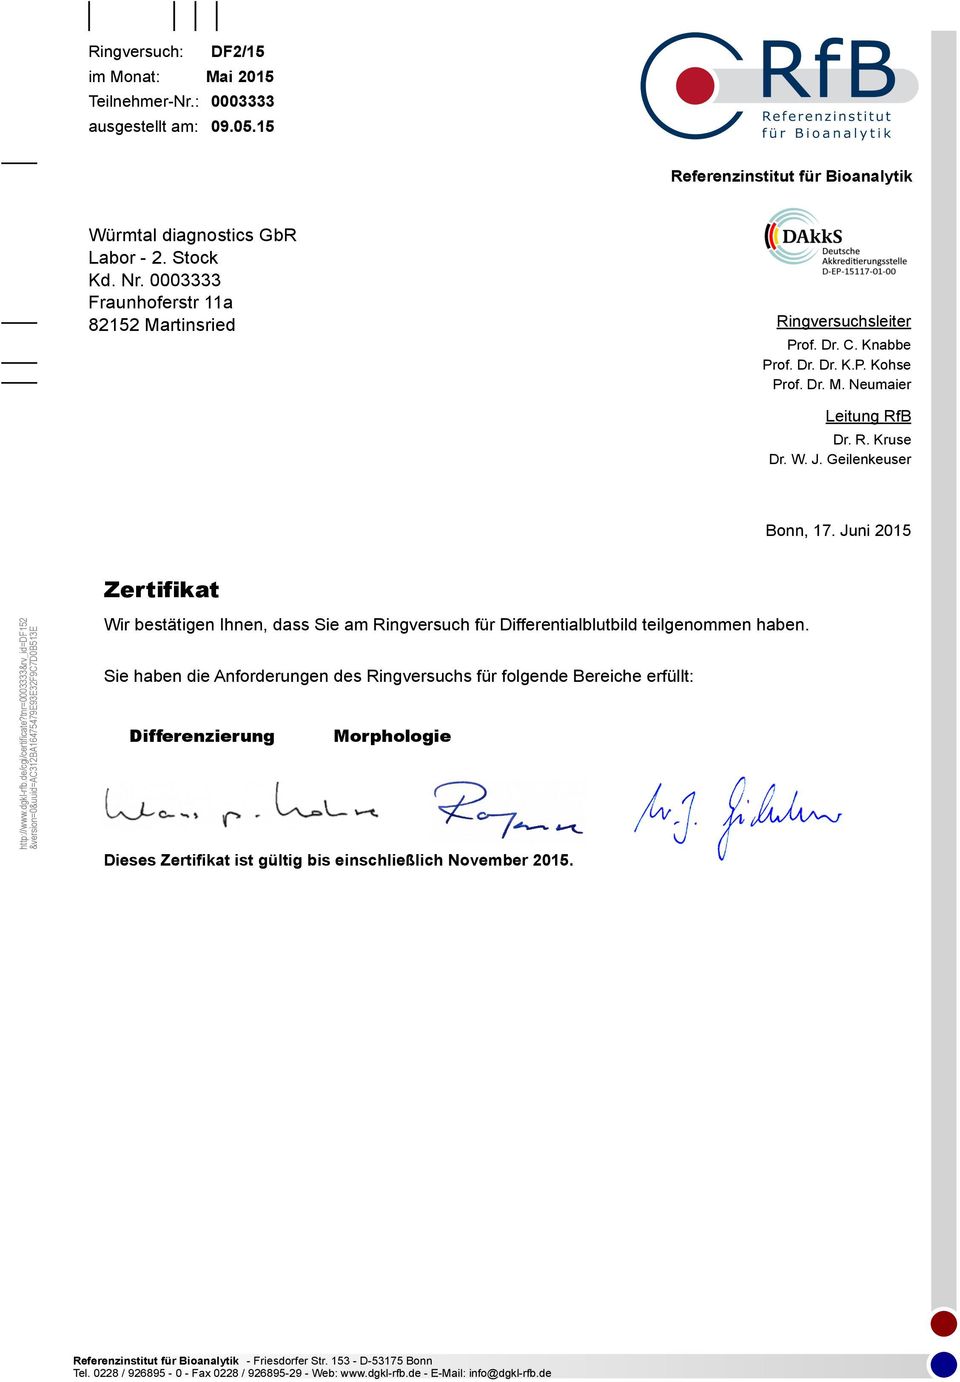 Juni 2015 Zertifikat http://www.dgkl-rfb.de/cgi/certificate?